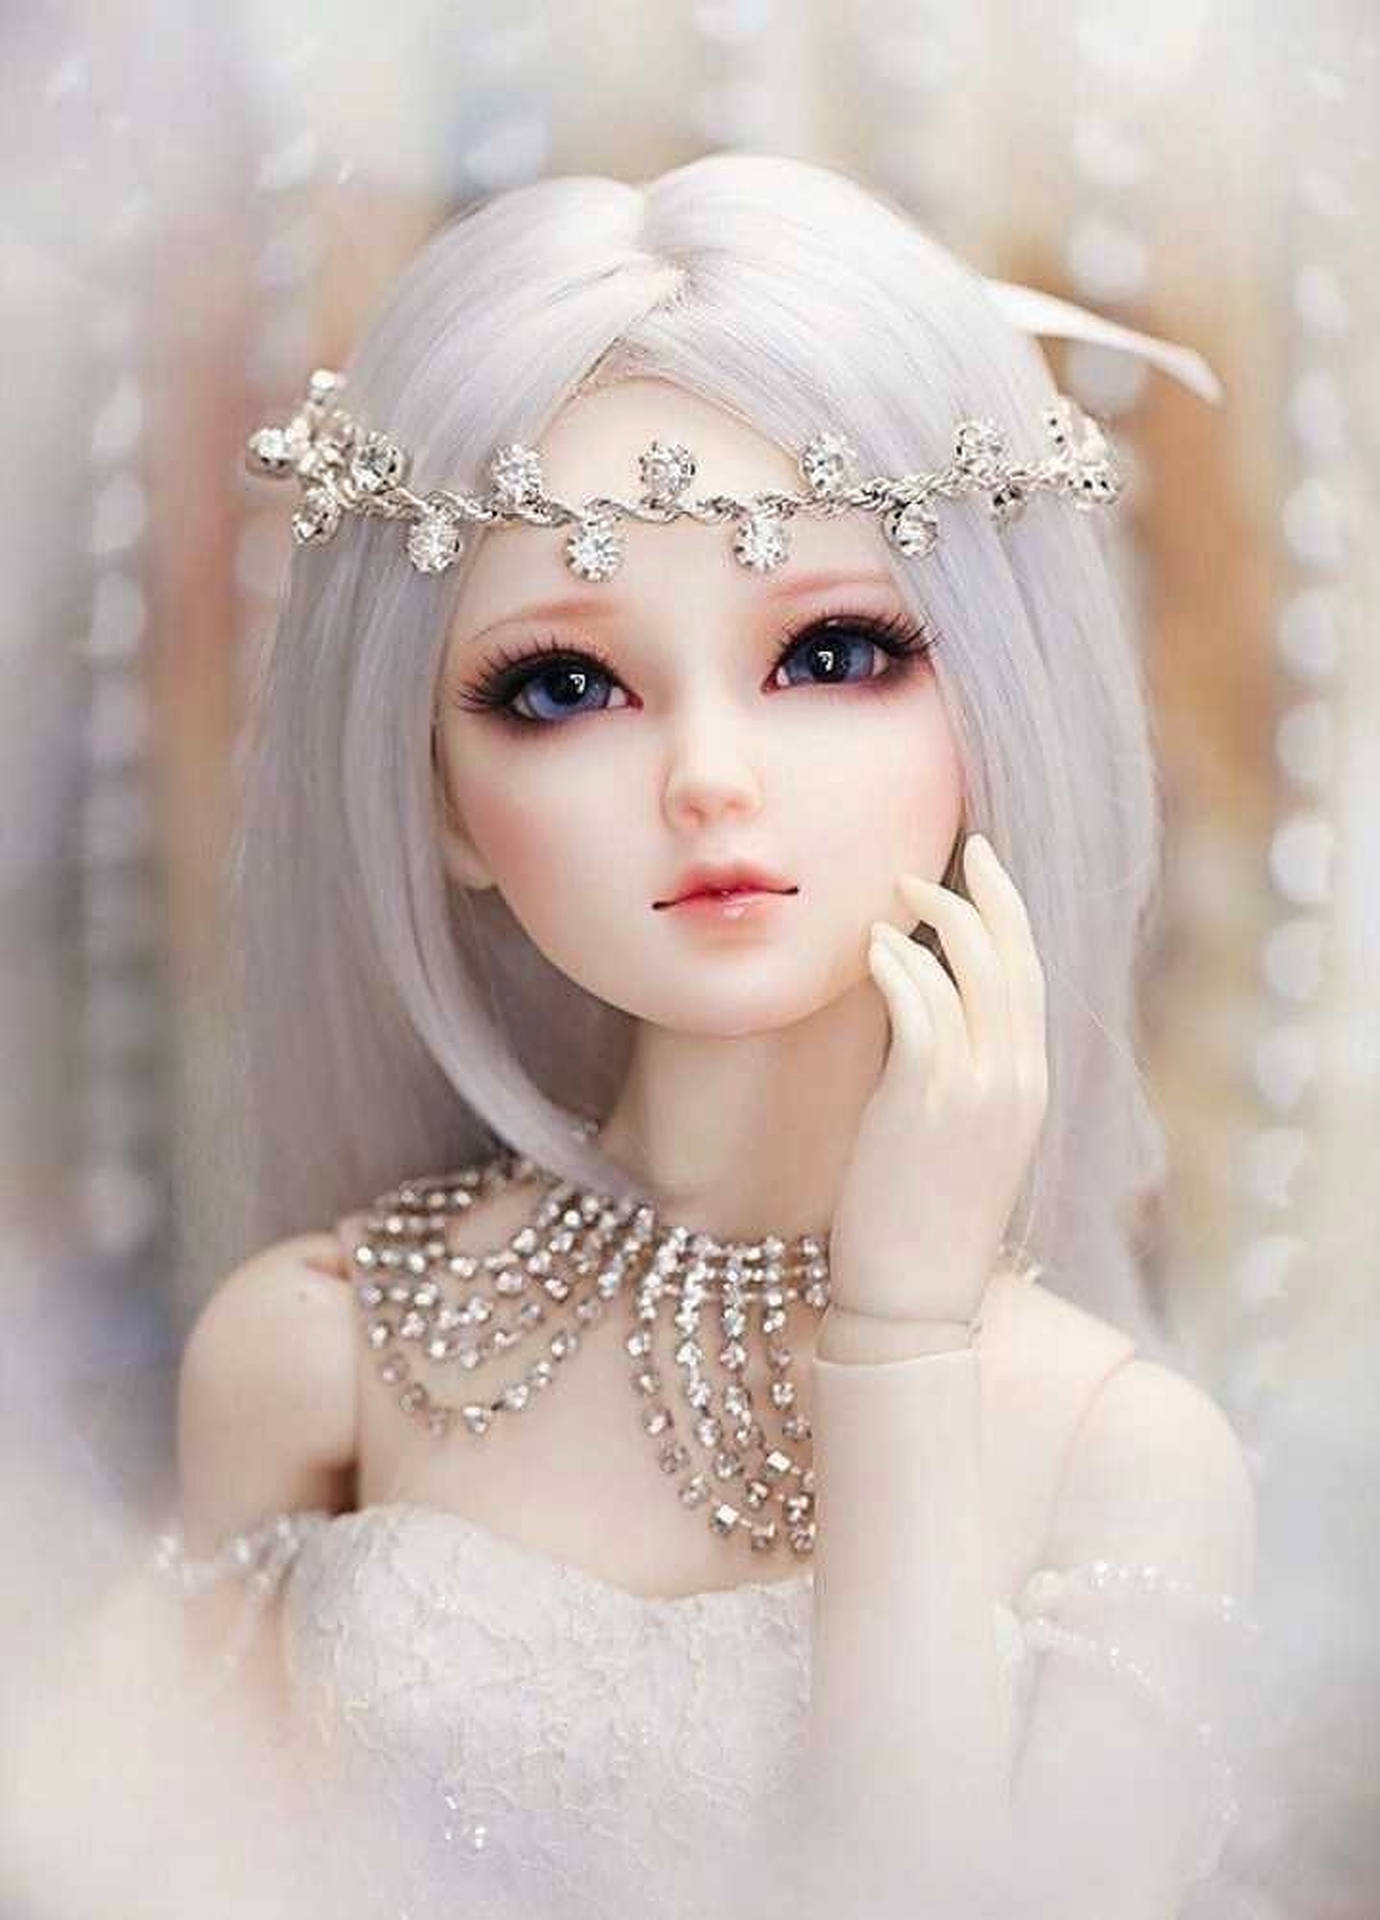 Enchanted White Doll Background